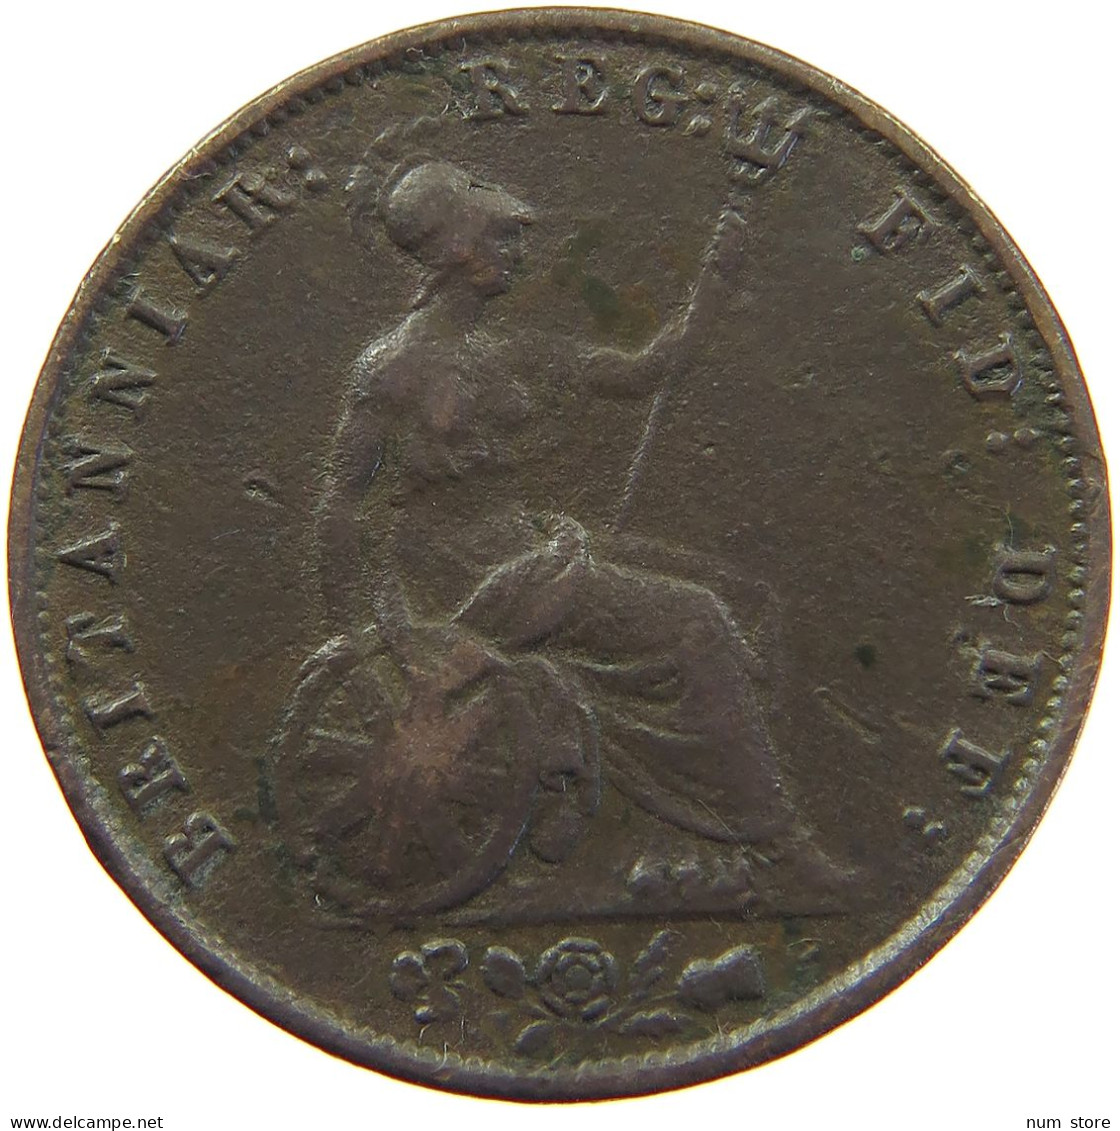 GREAT BRITAIN HALFPENNY 1858 Victoria 1837-1901 #s010 0265 - C. 1/2 Penny